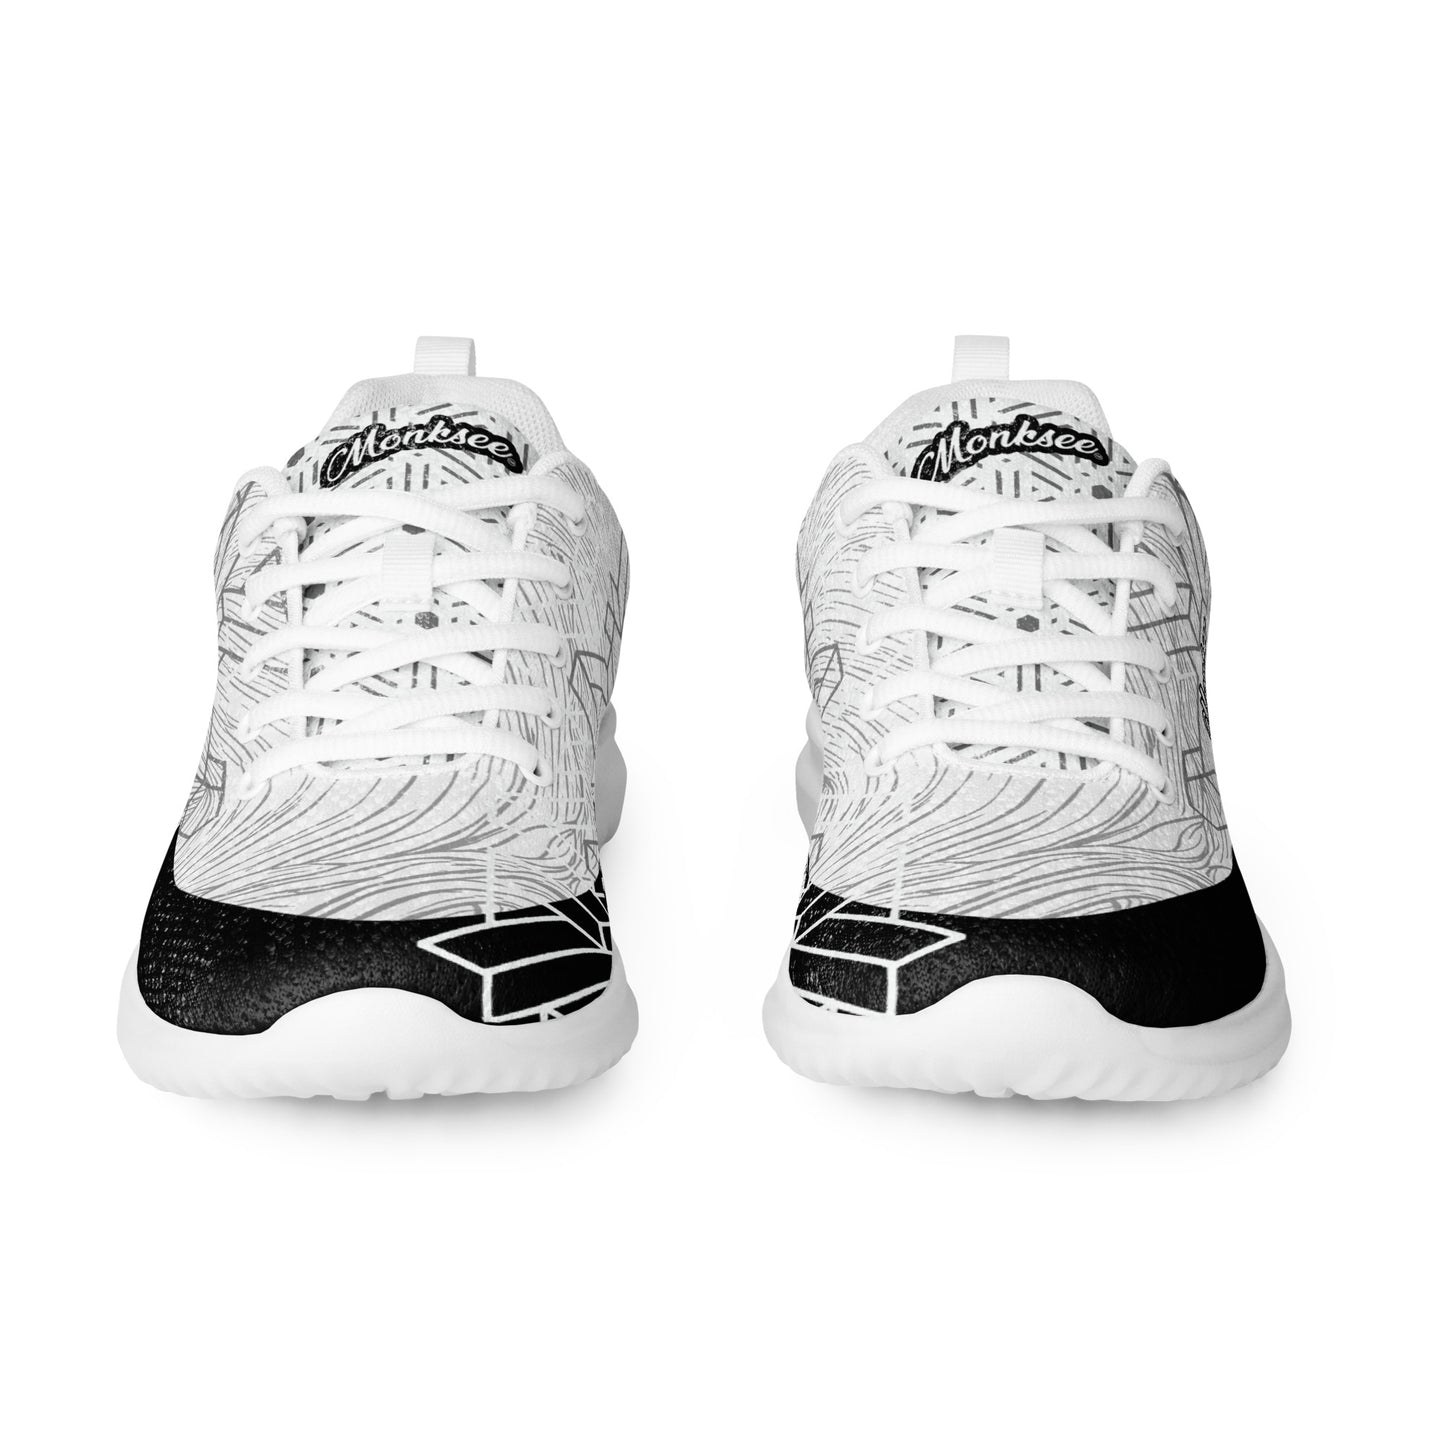 Monksee ISO Men’s Sneakers (white).